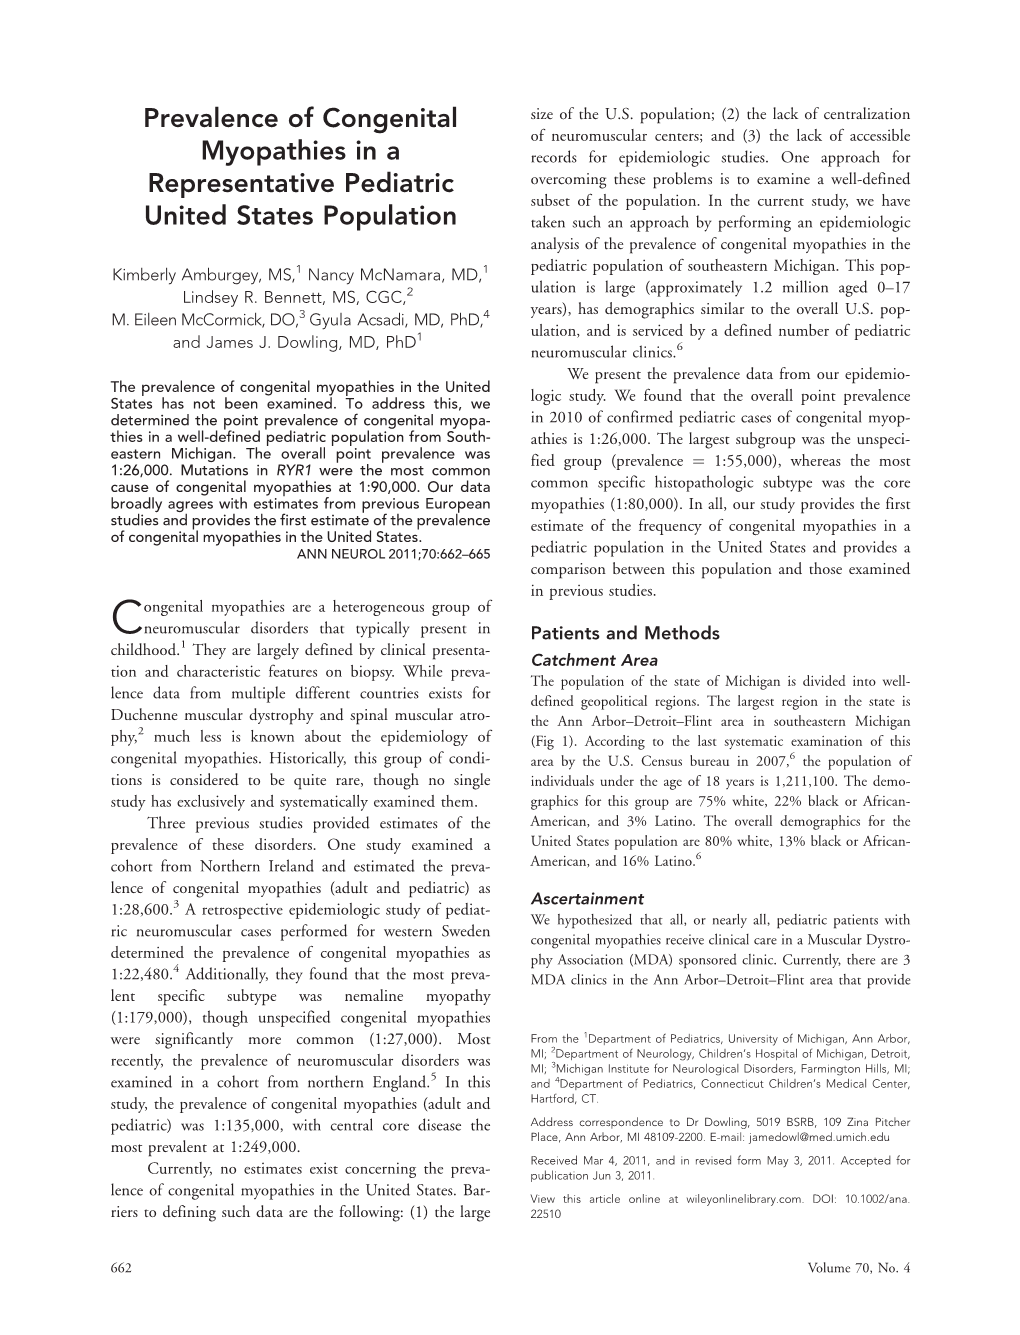 Prevalence of Congenital Myopathies in a Representative Pediatric United